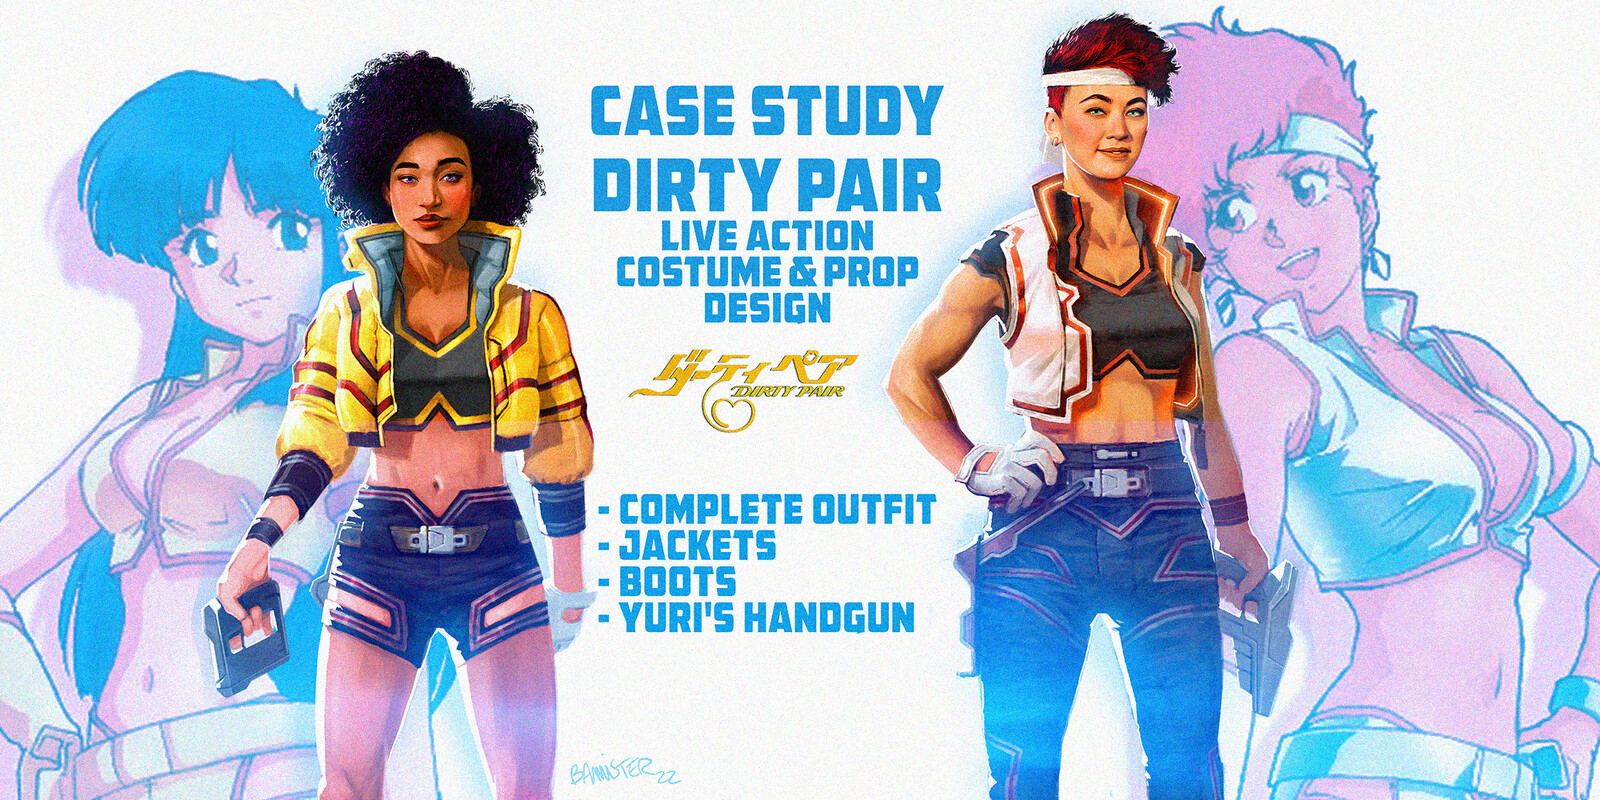 Dirty Pair costume design